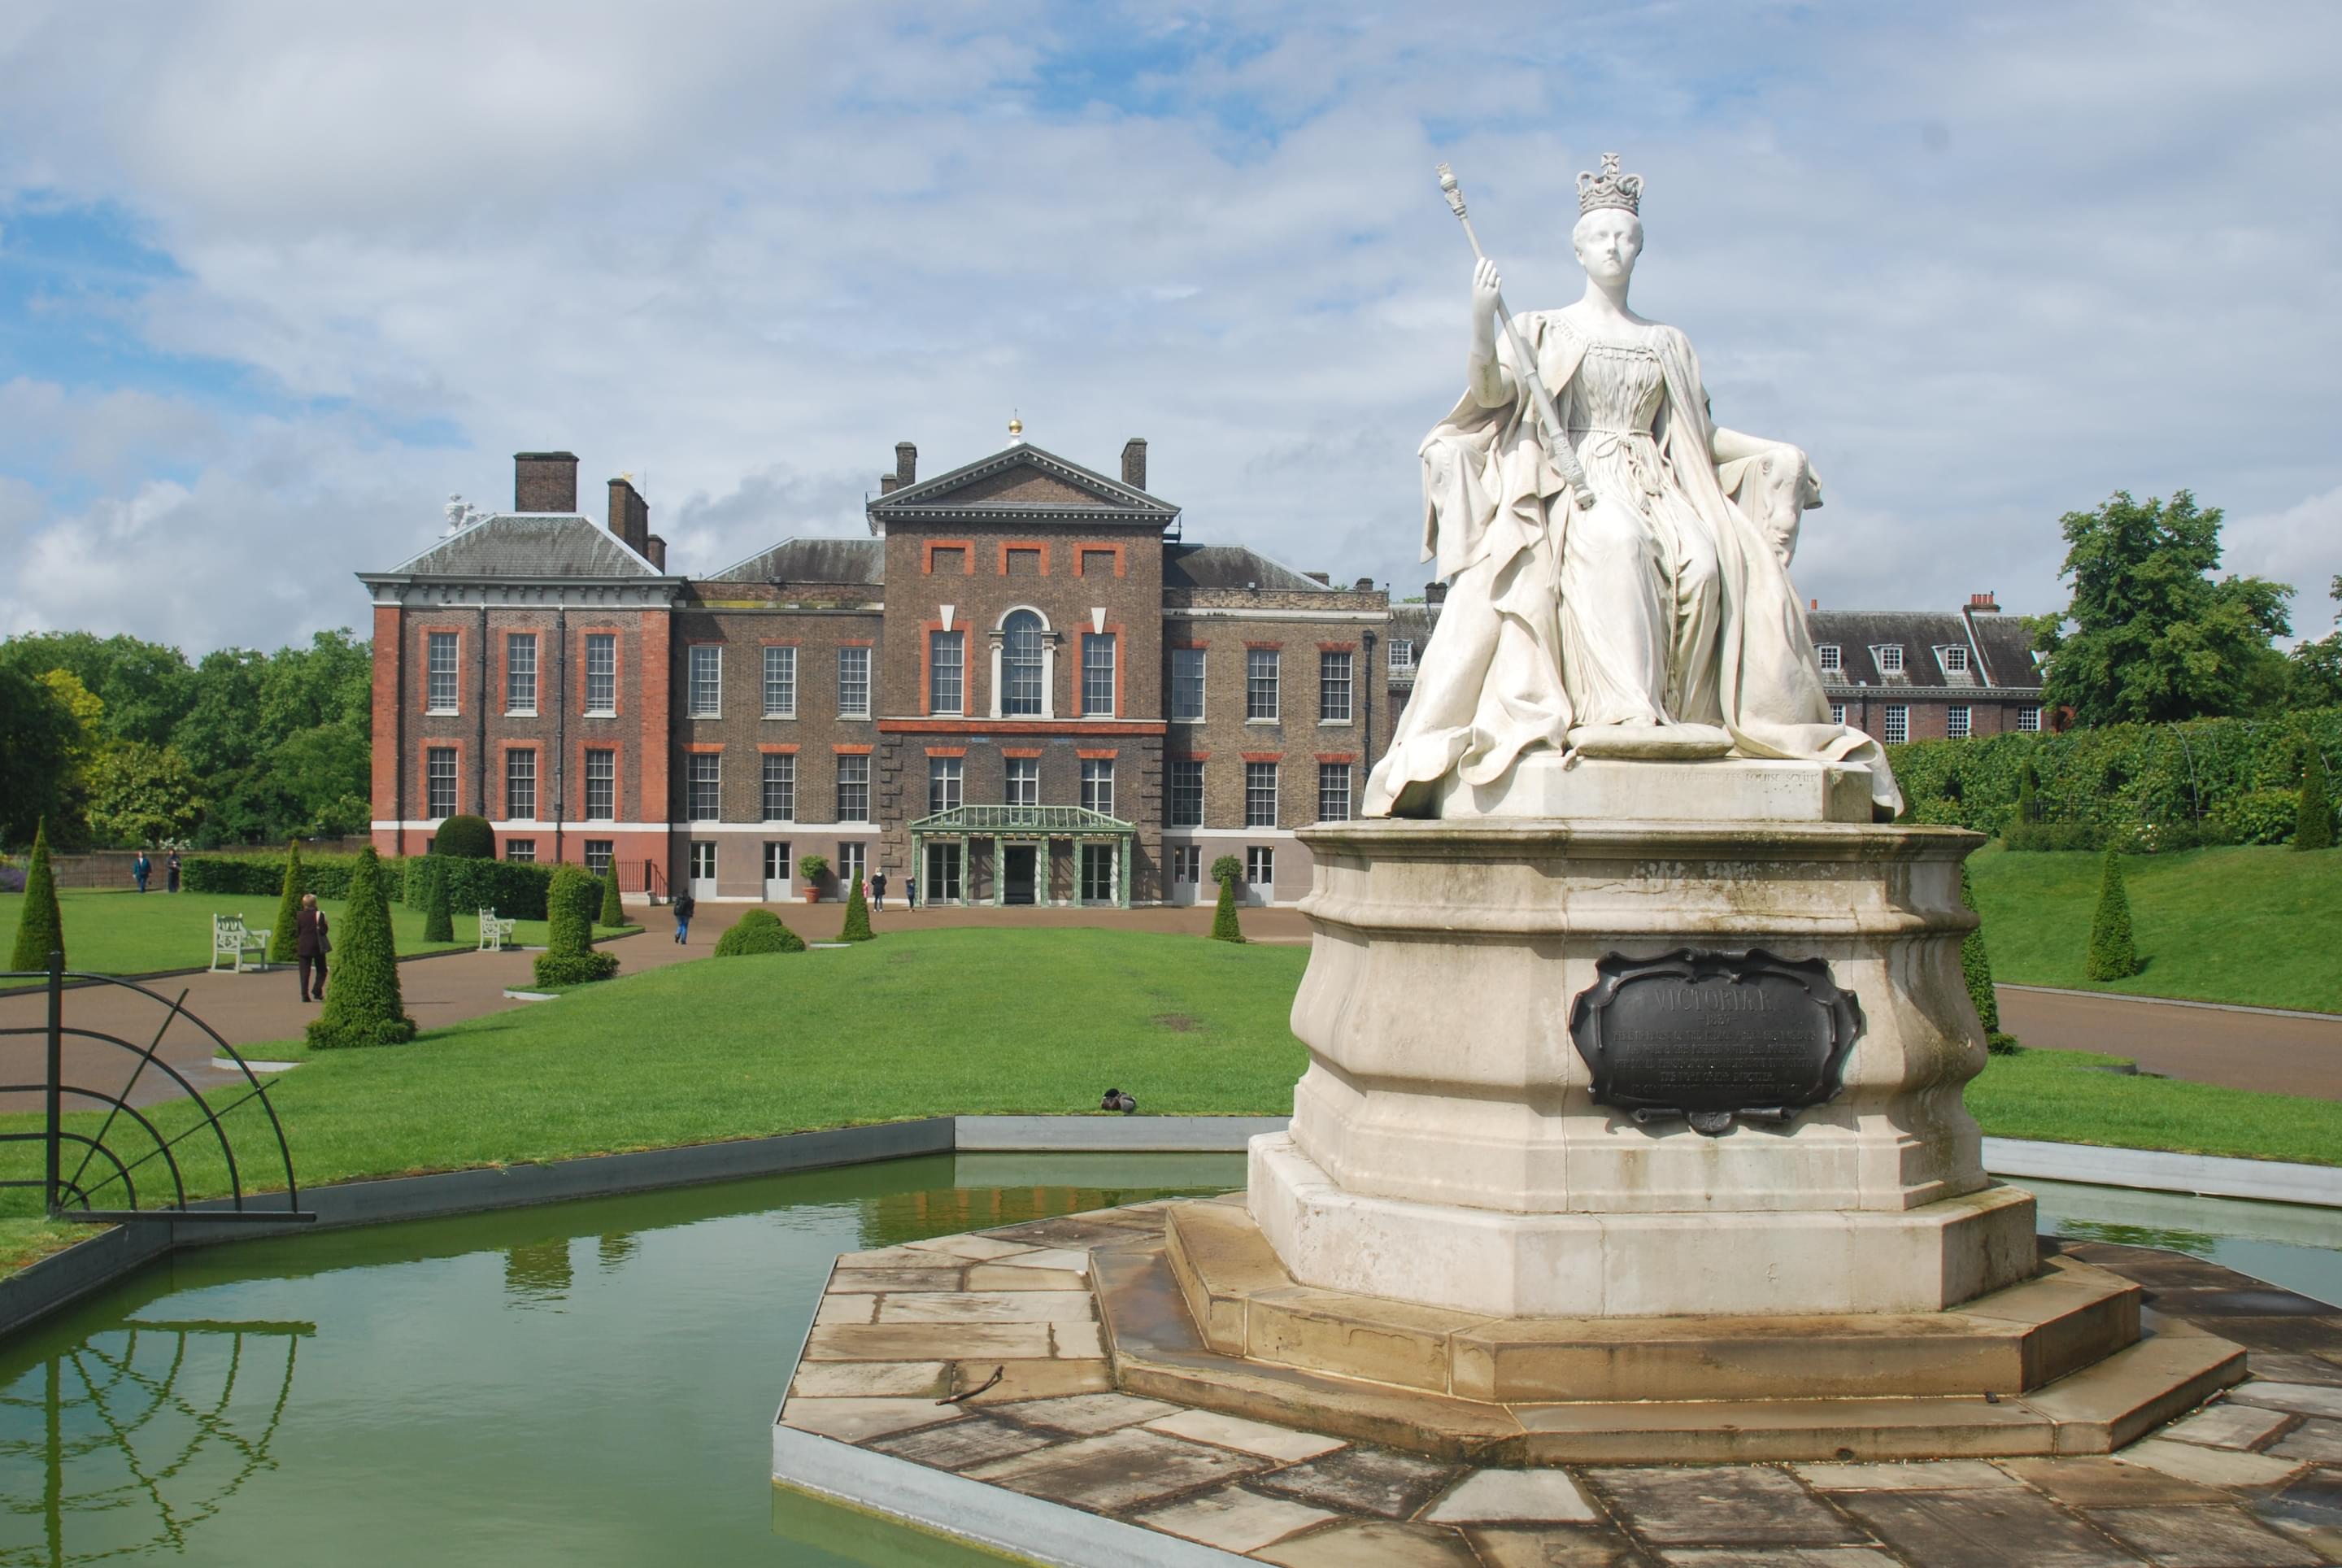 Kensington Palace Overview